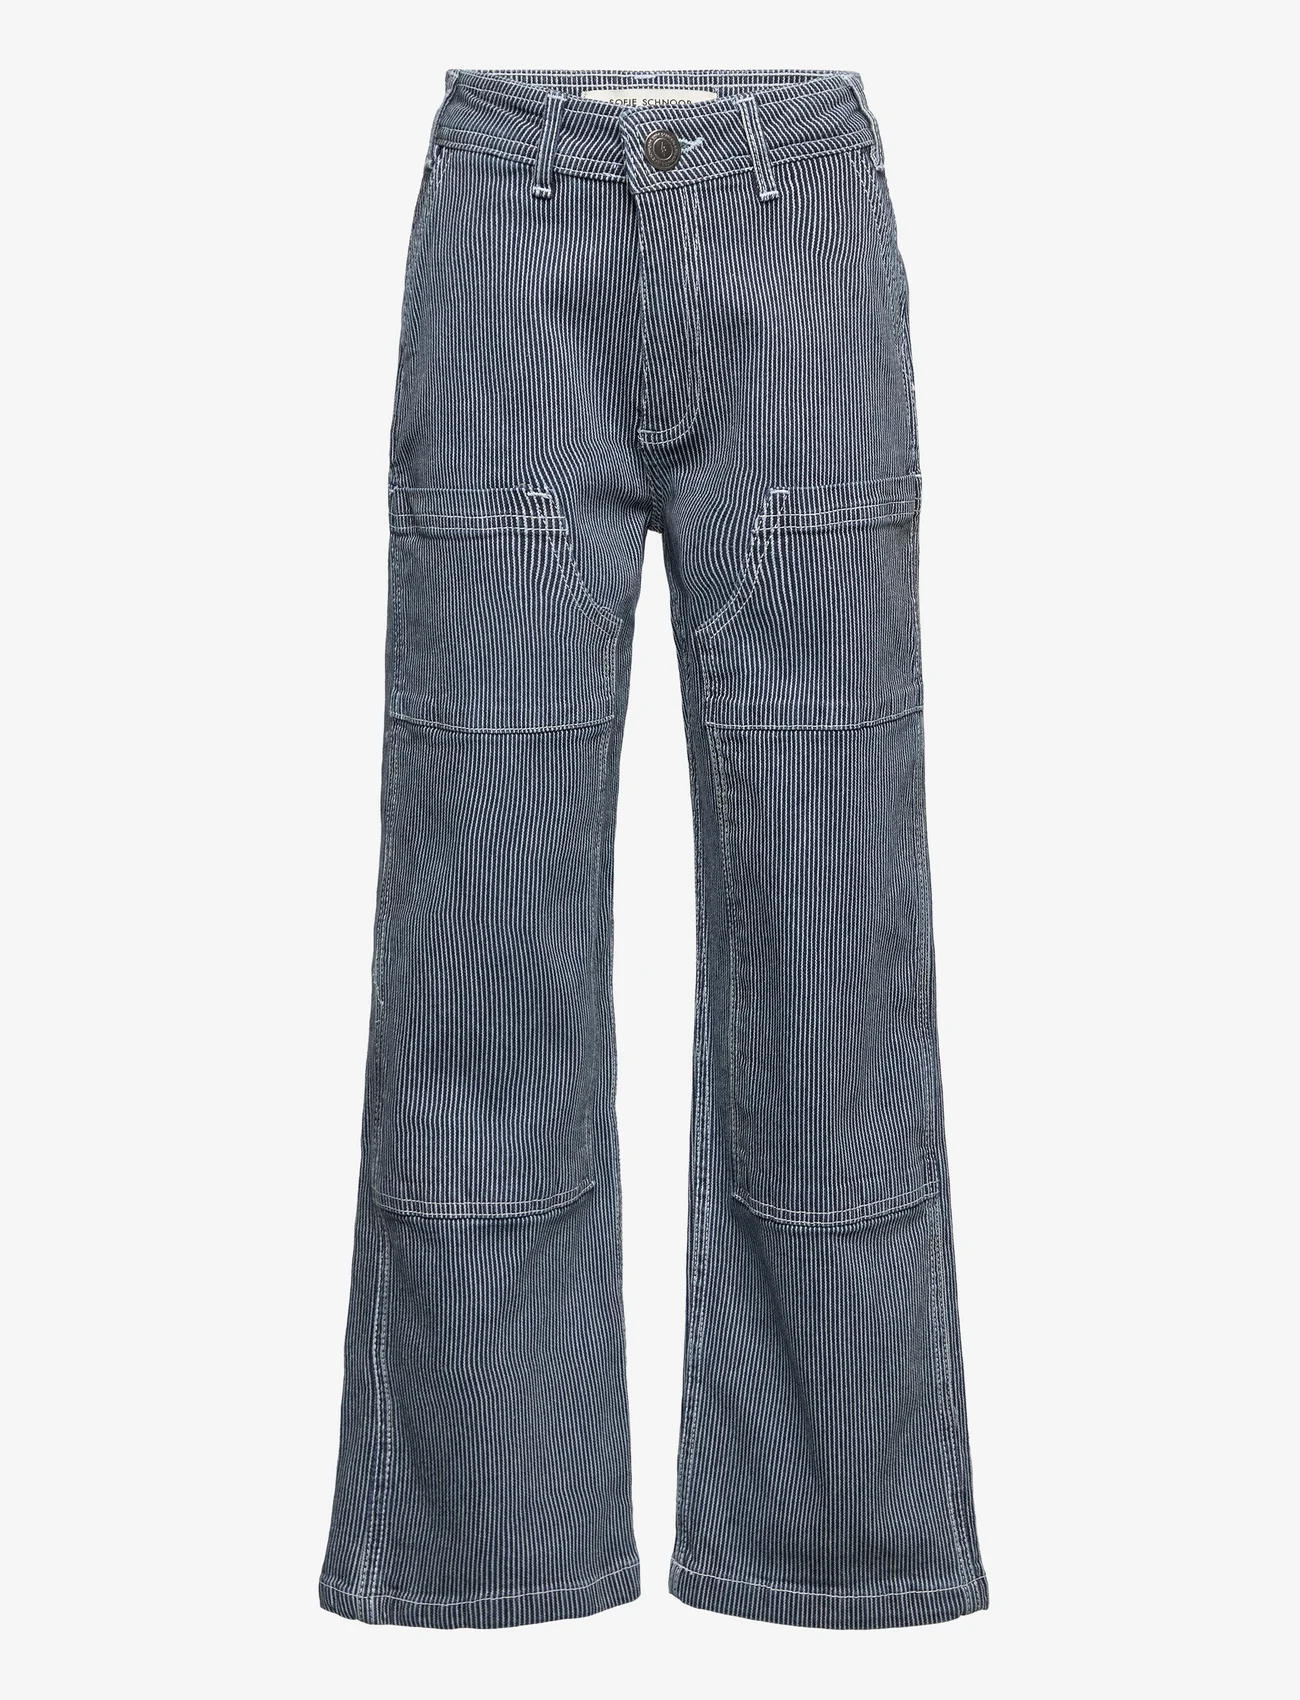 Sofie Schnoor Young - Trousers - bootcut jeans - dark denim blue - 0